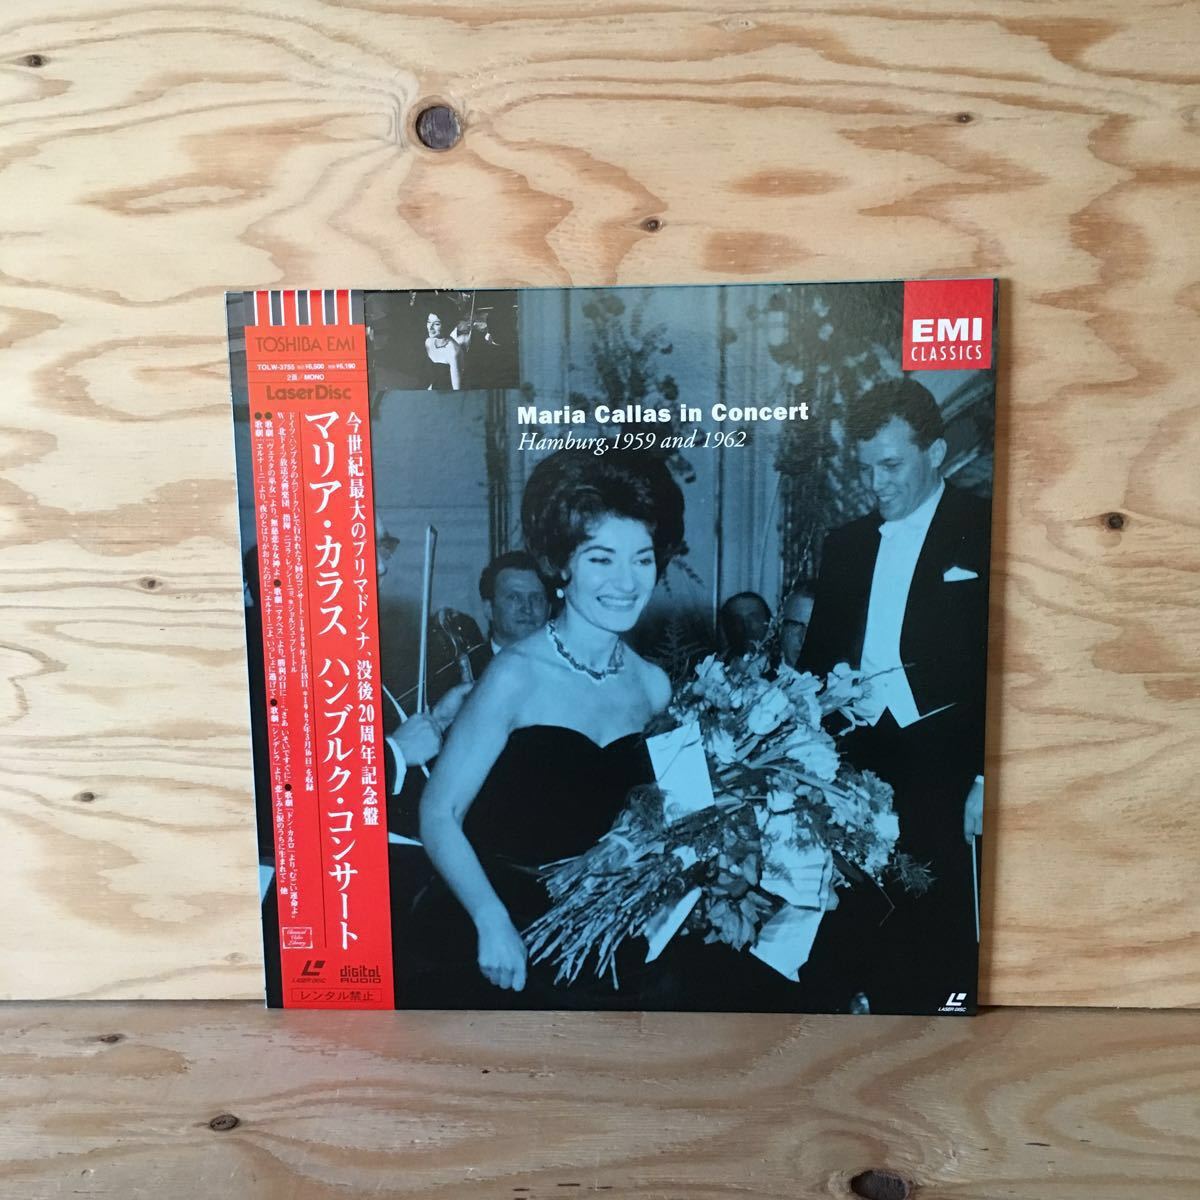 *3FJJA-200206 rare [ Mali a*kalas handle bruk* concert Maria Callas in Concert Hamburg,1959 and 1962]LD laser disk 